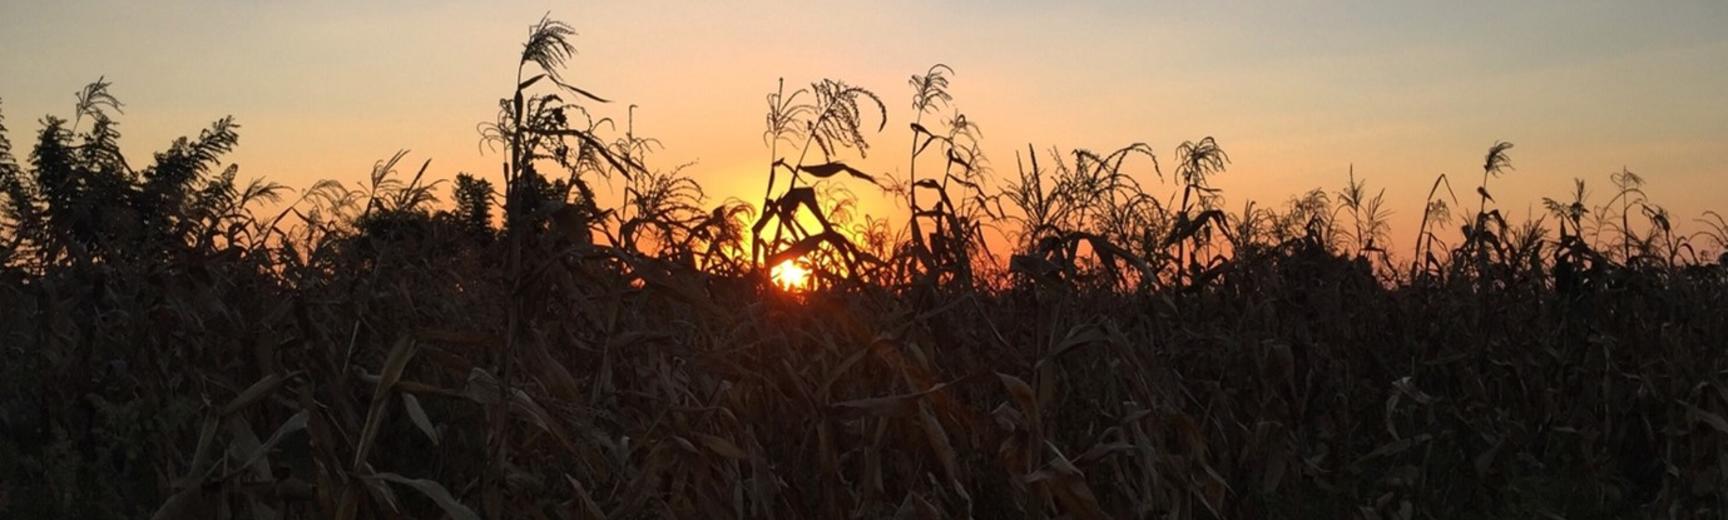 Corn field at dusk in Malawi